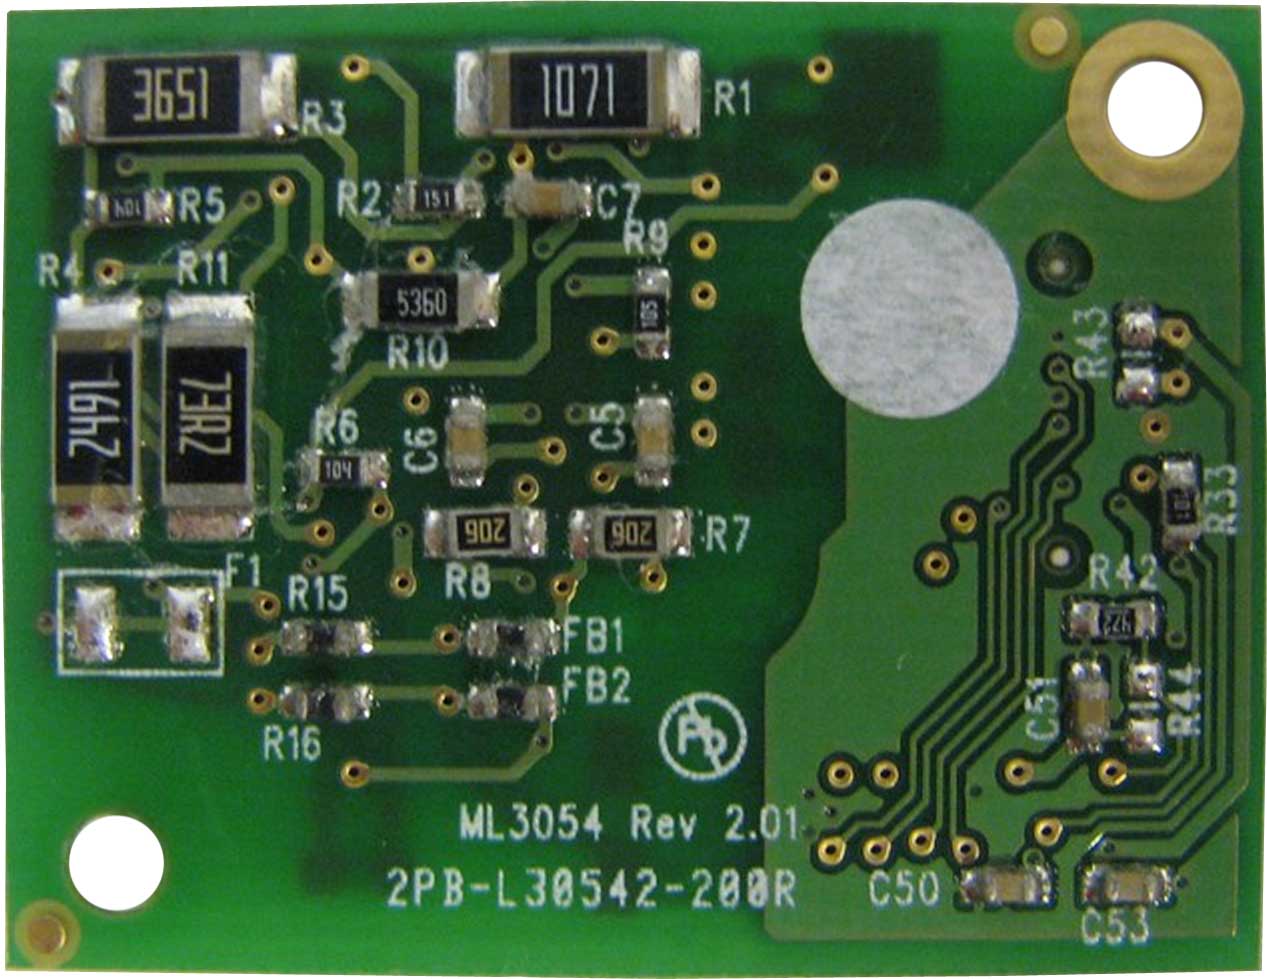 Motorola ML3054 Rev 2.01 модем dial-up 2PB-L30541-200R обзор и разборка